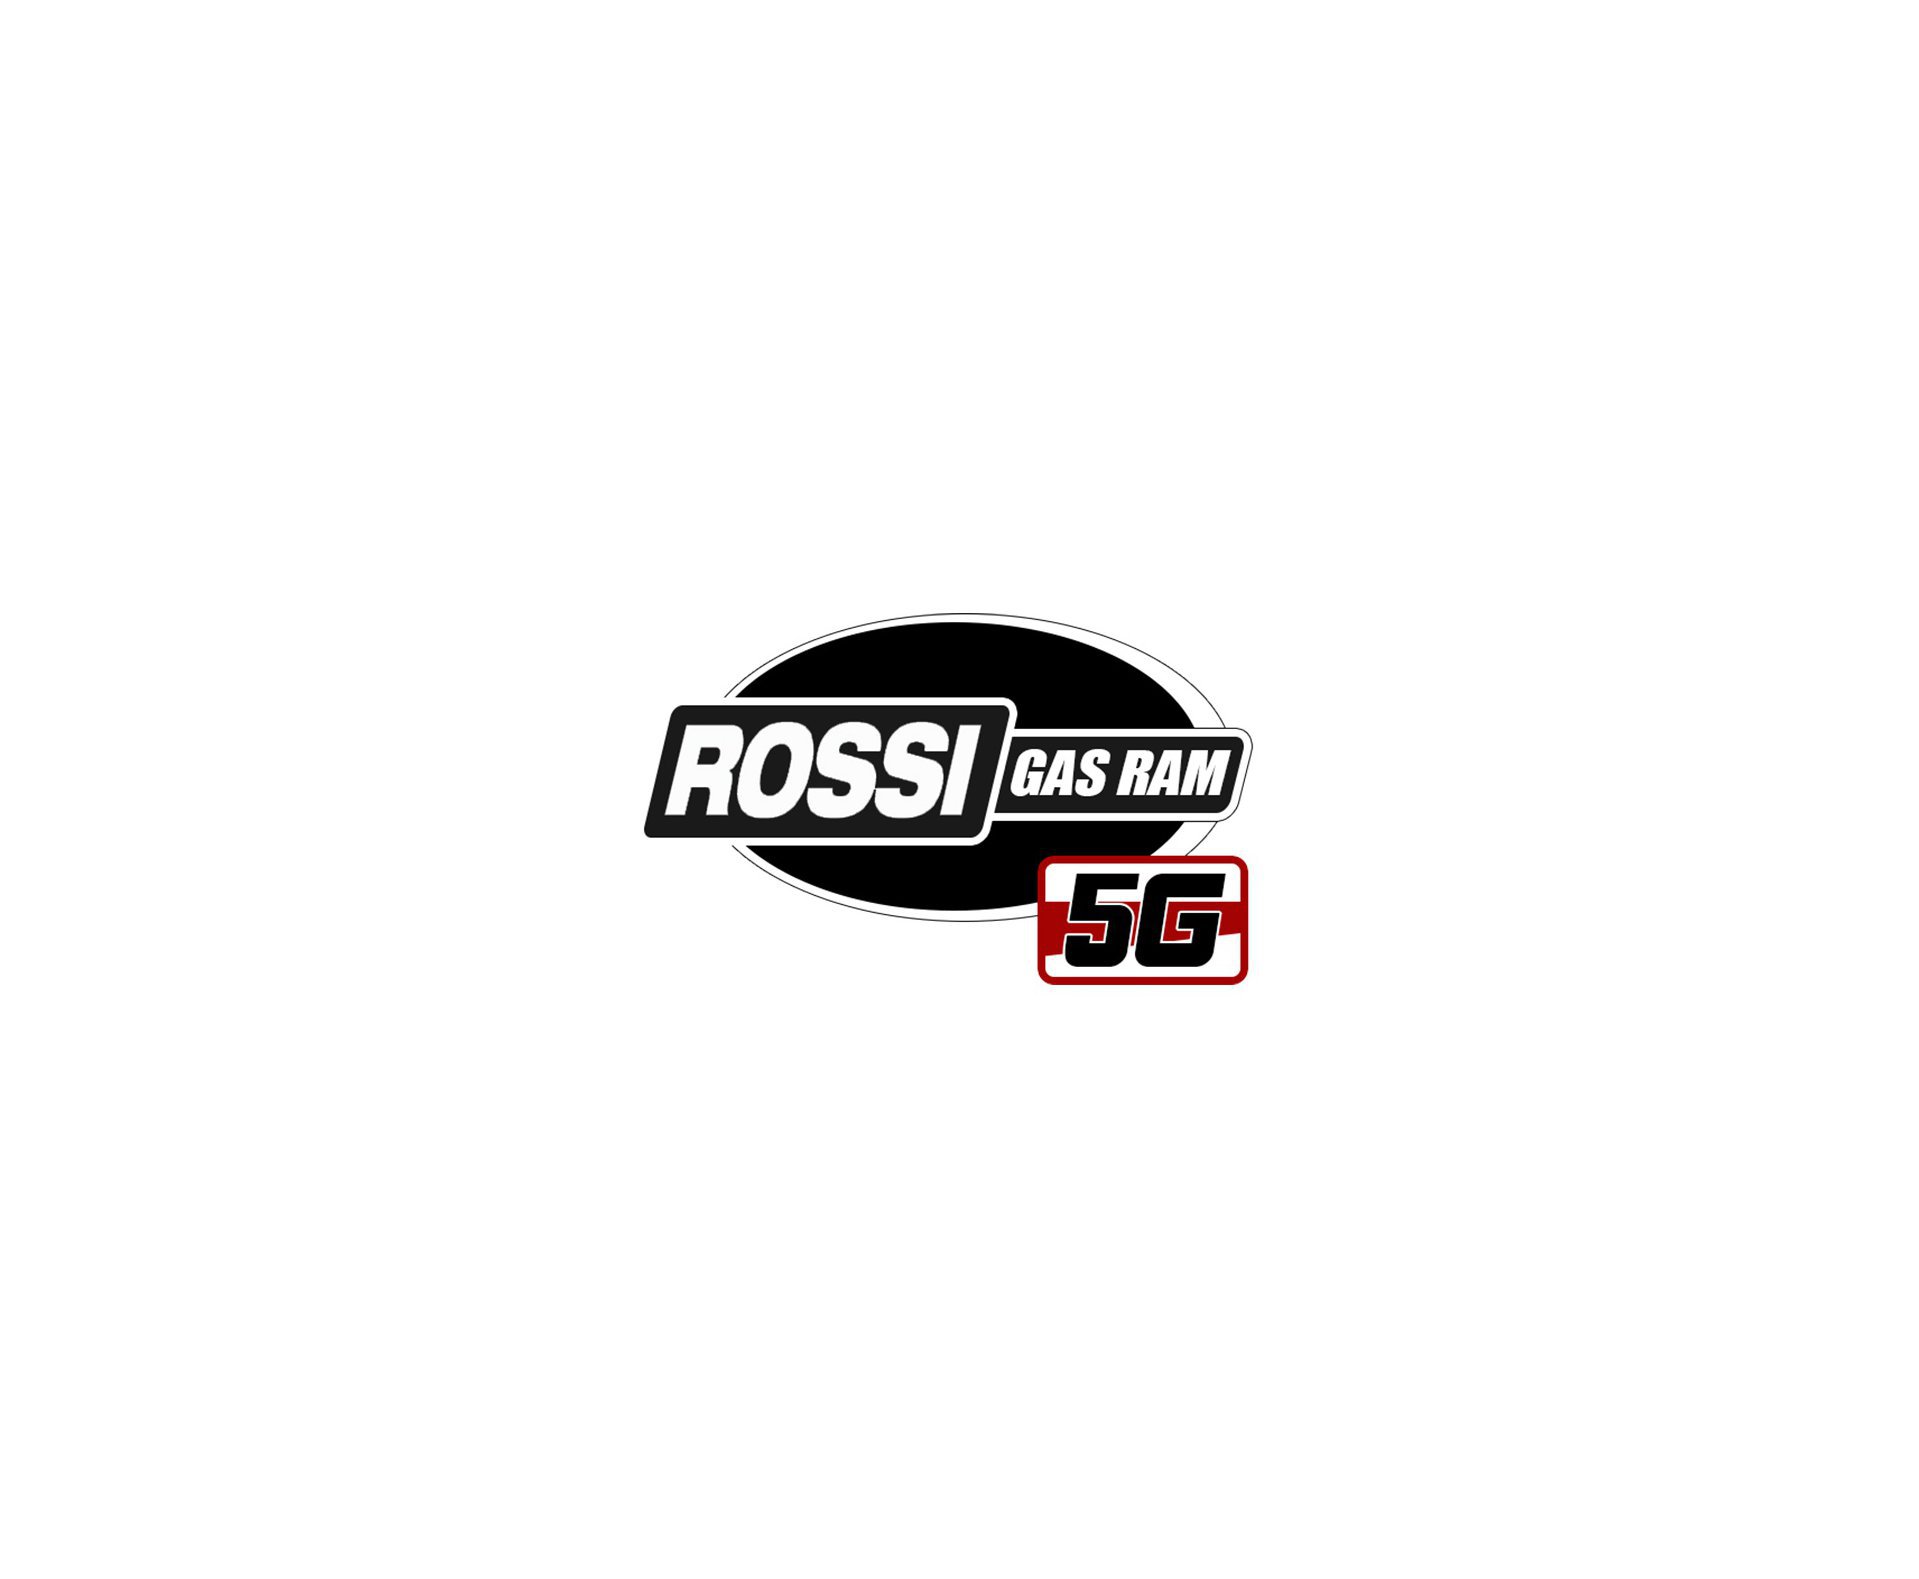 Carabina de Pressão Rossi Dione 5G Gás Ram 60kg 5,5mm + Capa + Luneta 4x32